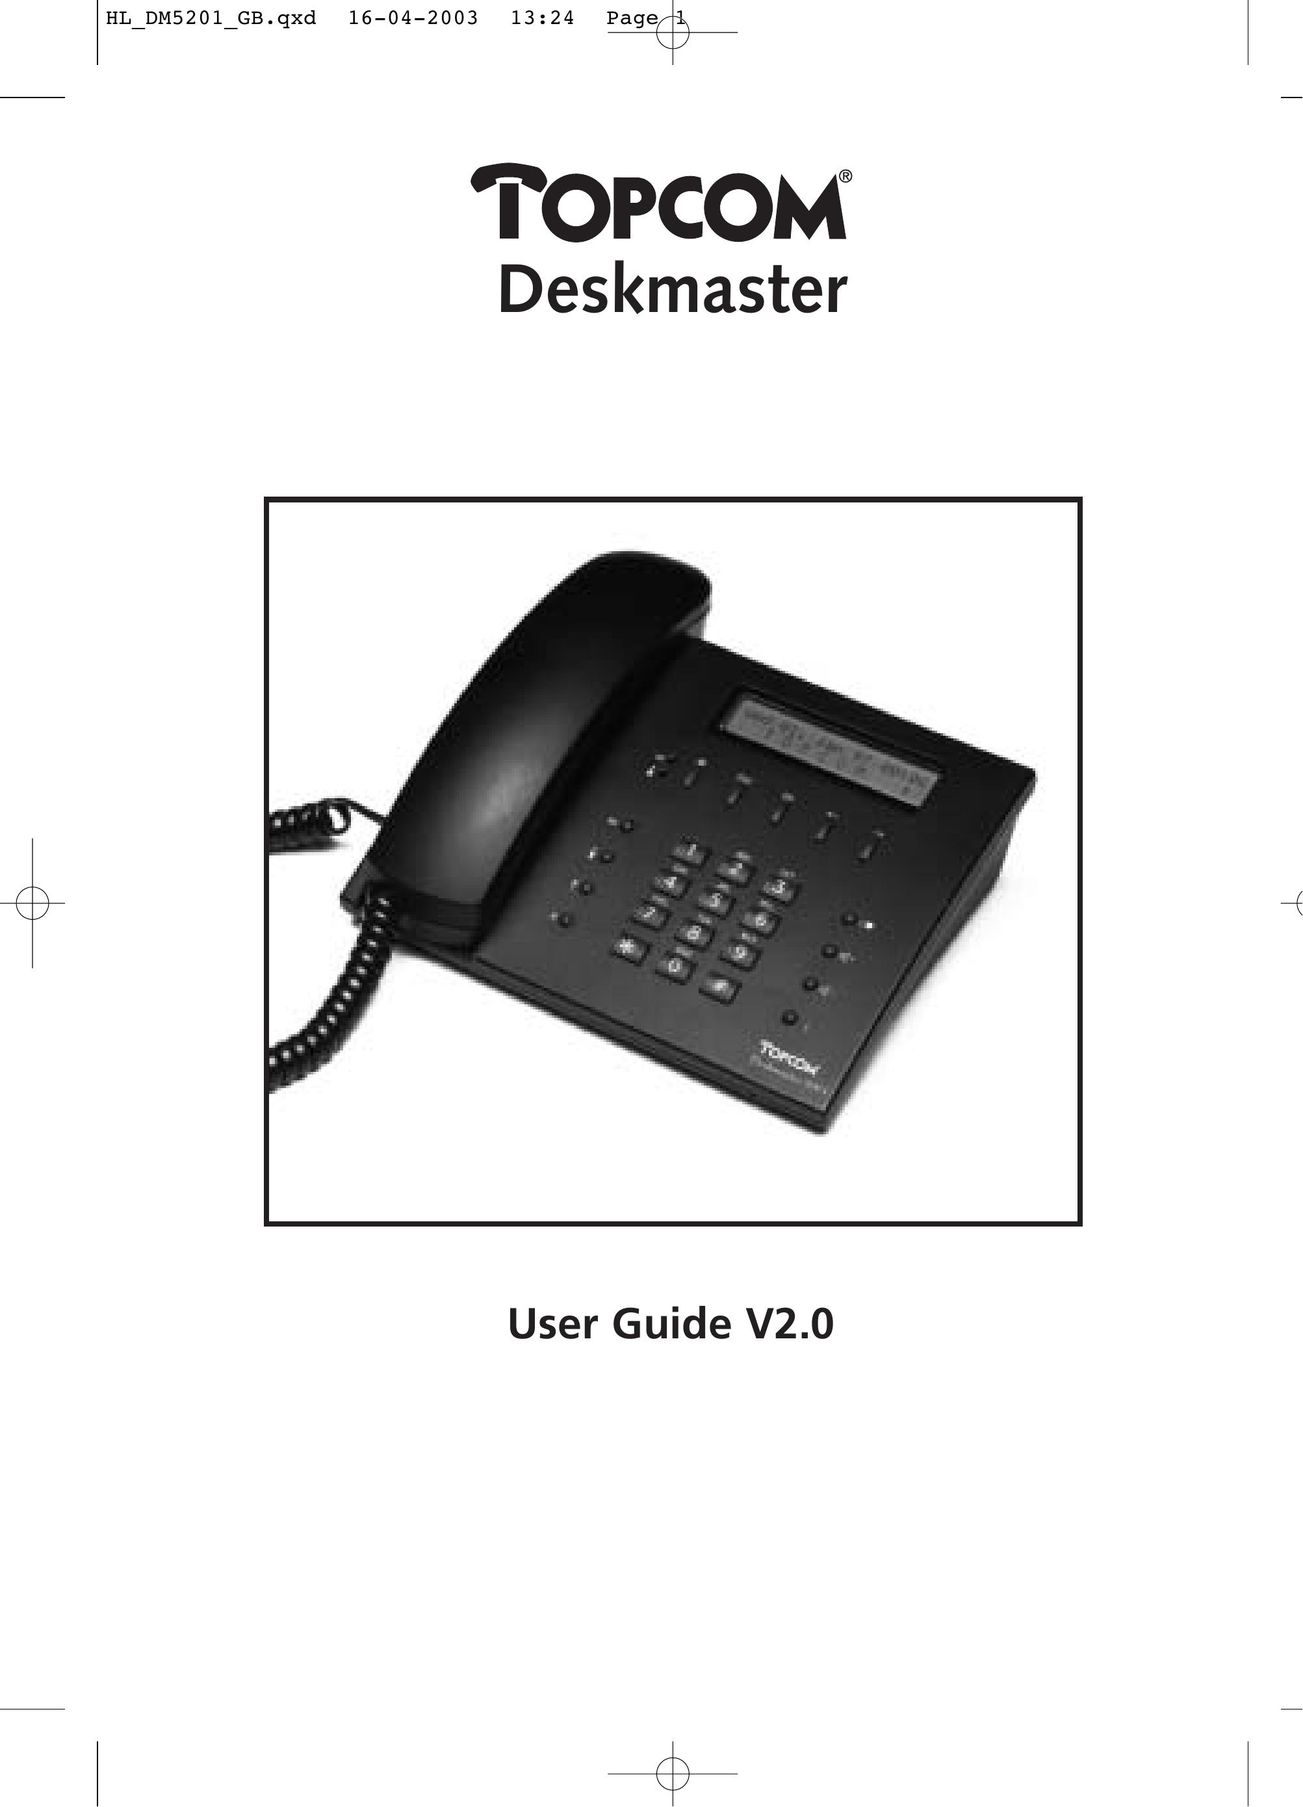 Topcom 520 Telephone User Manual